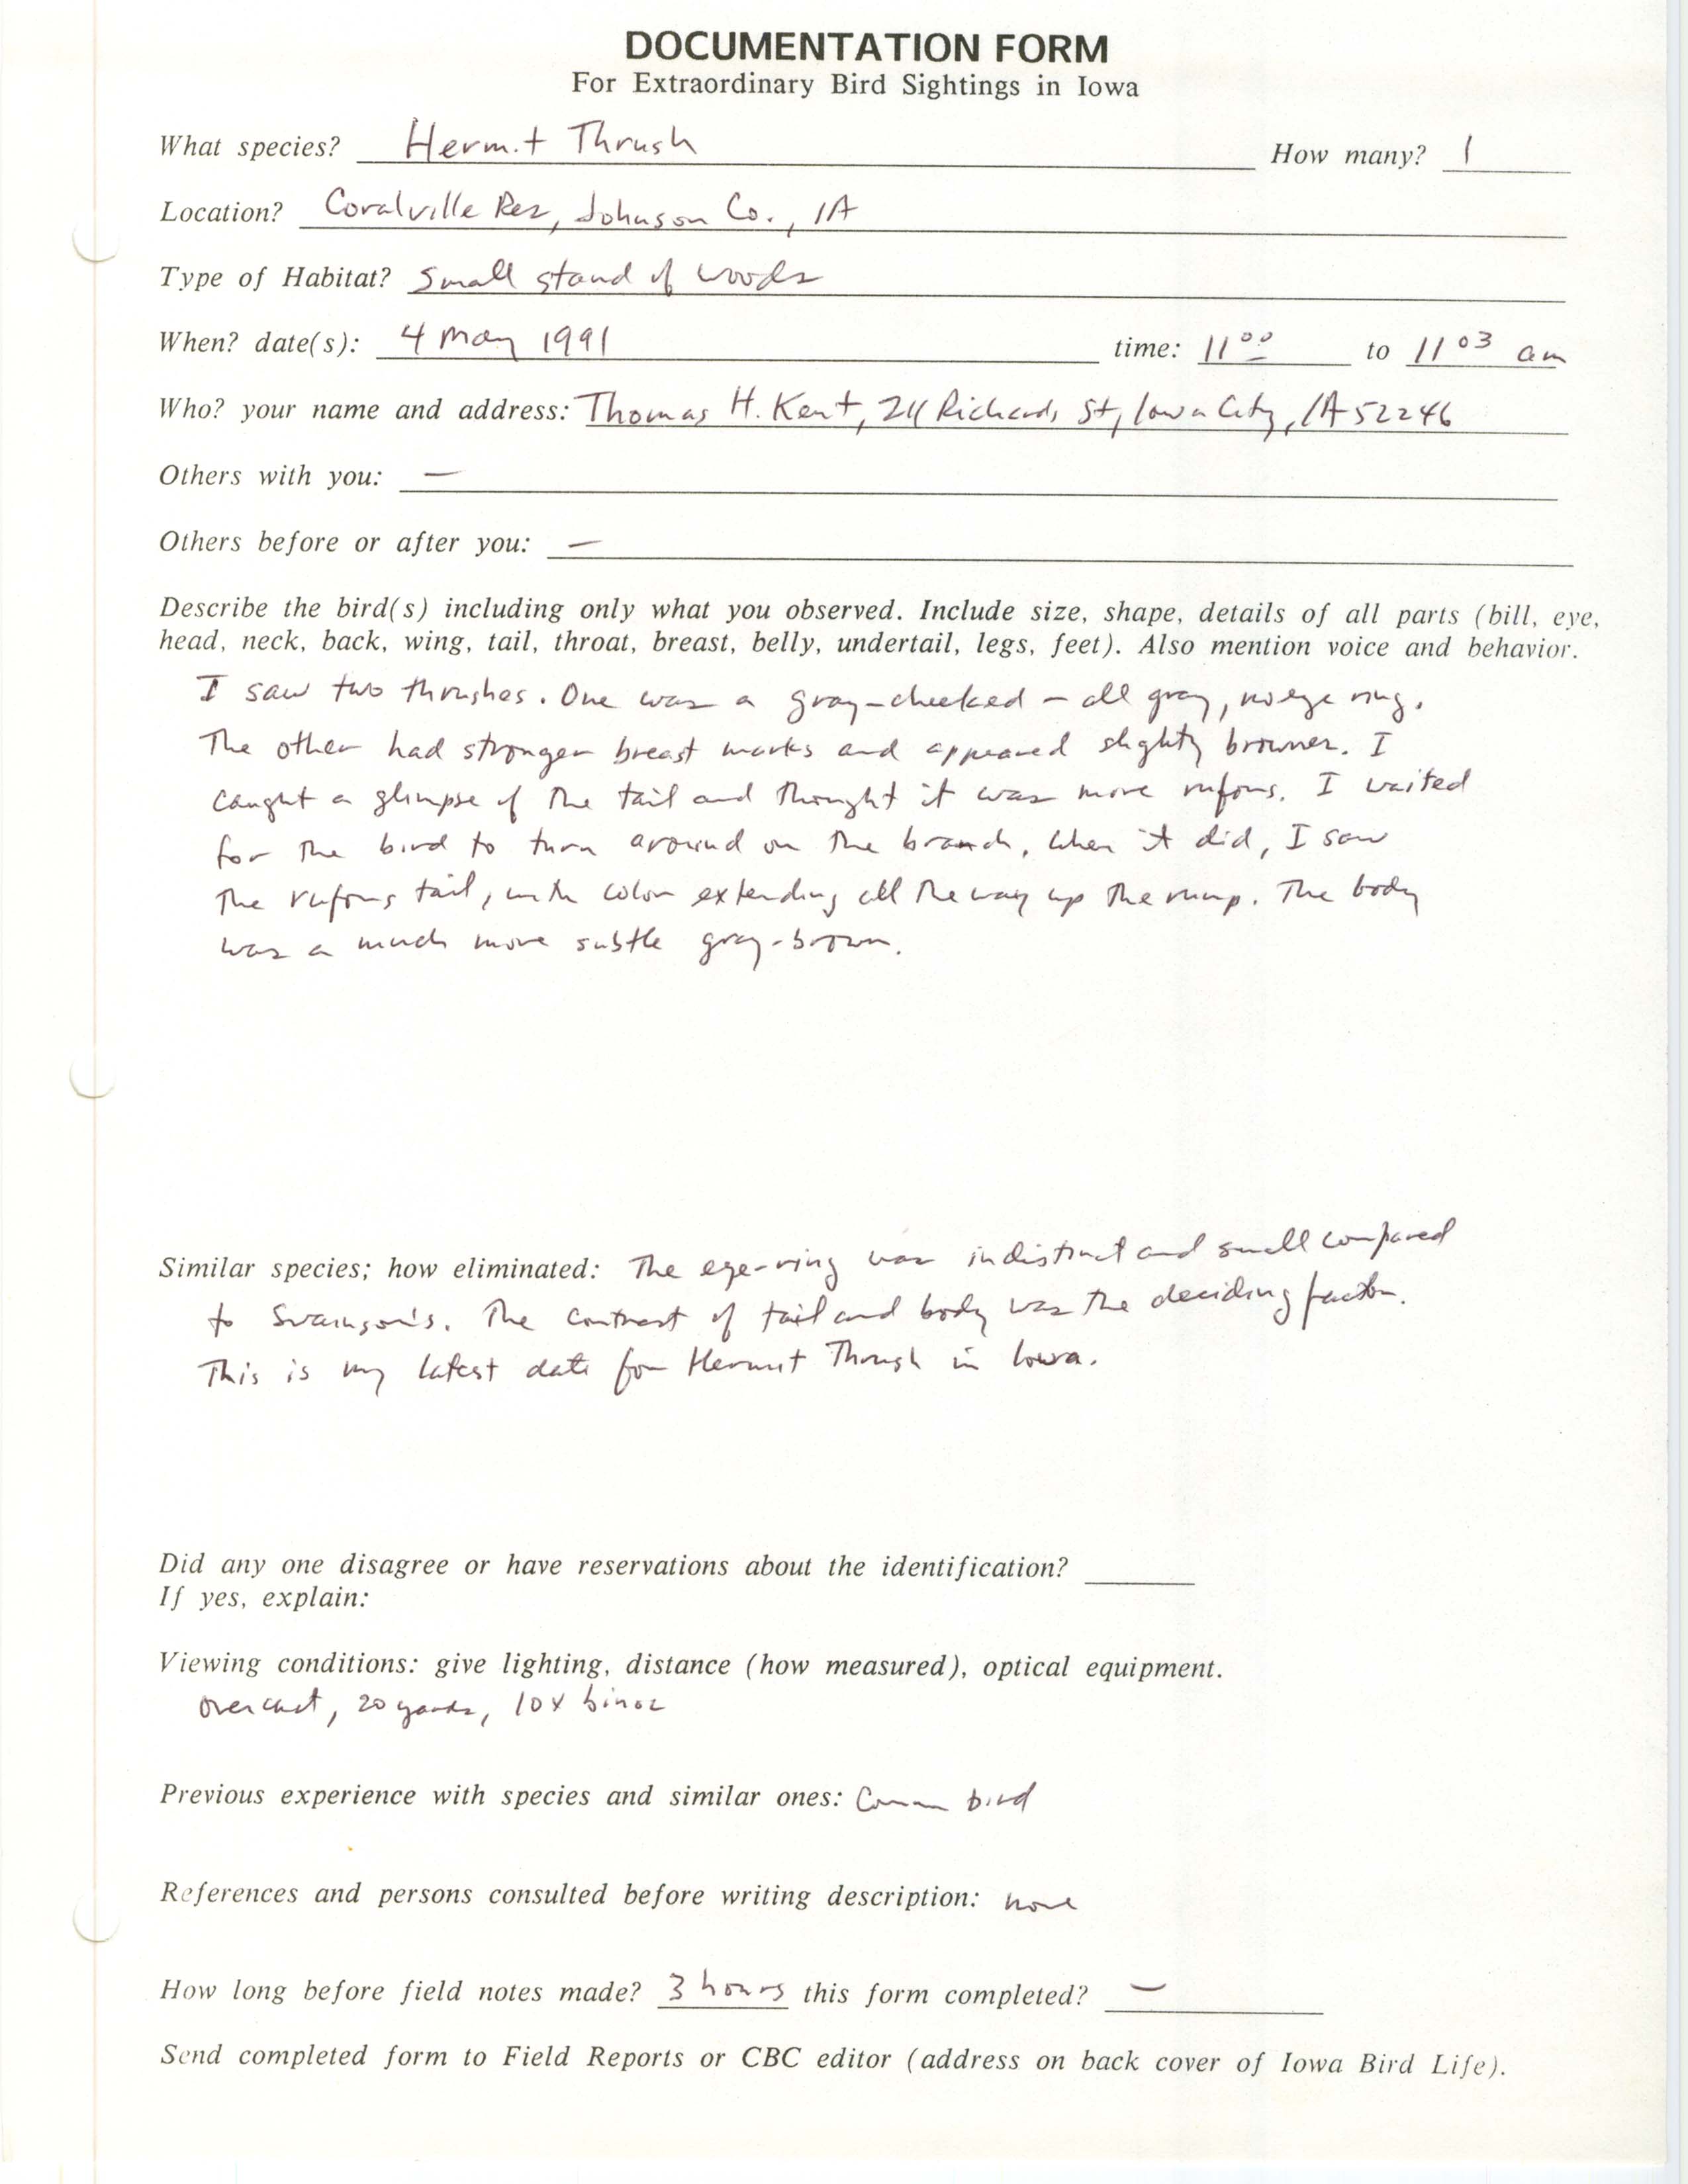 Rare bird documentation form for Hermit Thrush at Coralville Reservoir, 1991